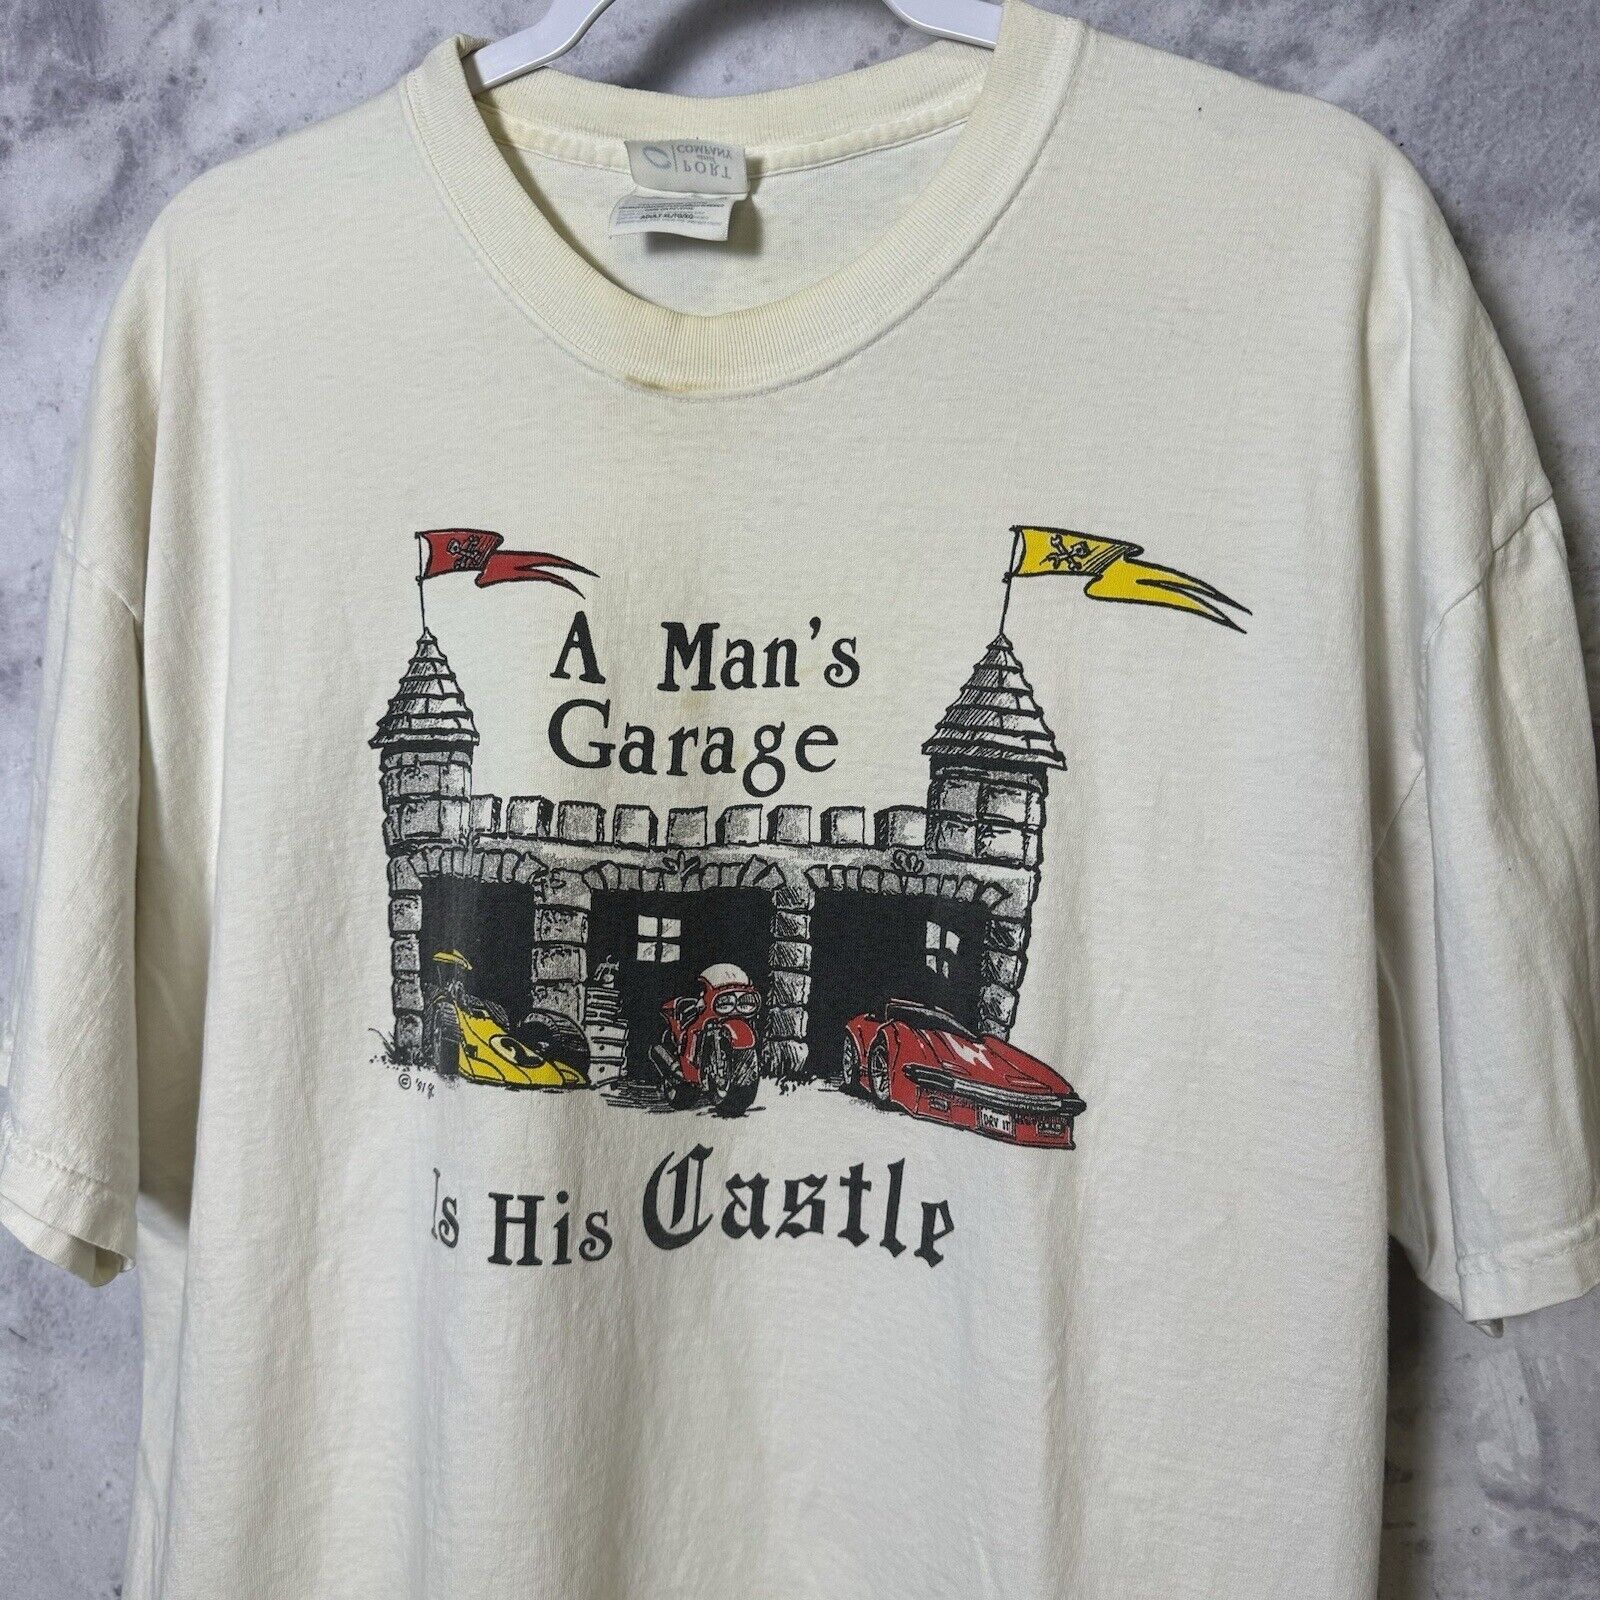 Vintage Vintage Mans Garage T Shirt Mens XL White Short Sleeve 90s Size US XL / EU 56 / 4 - 1 Preview